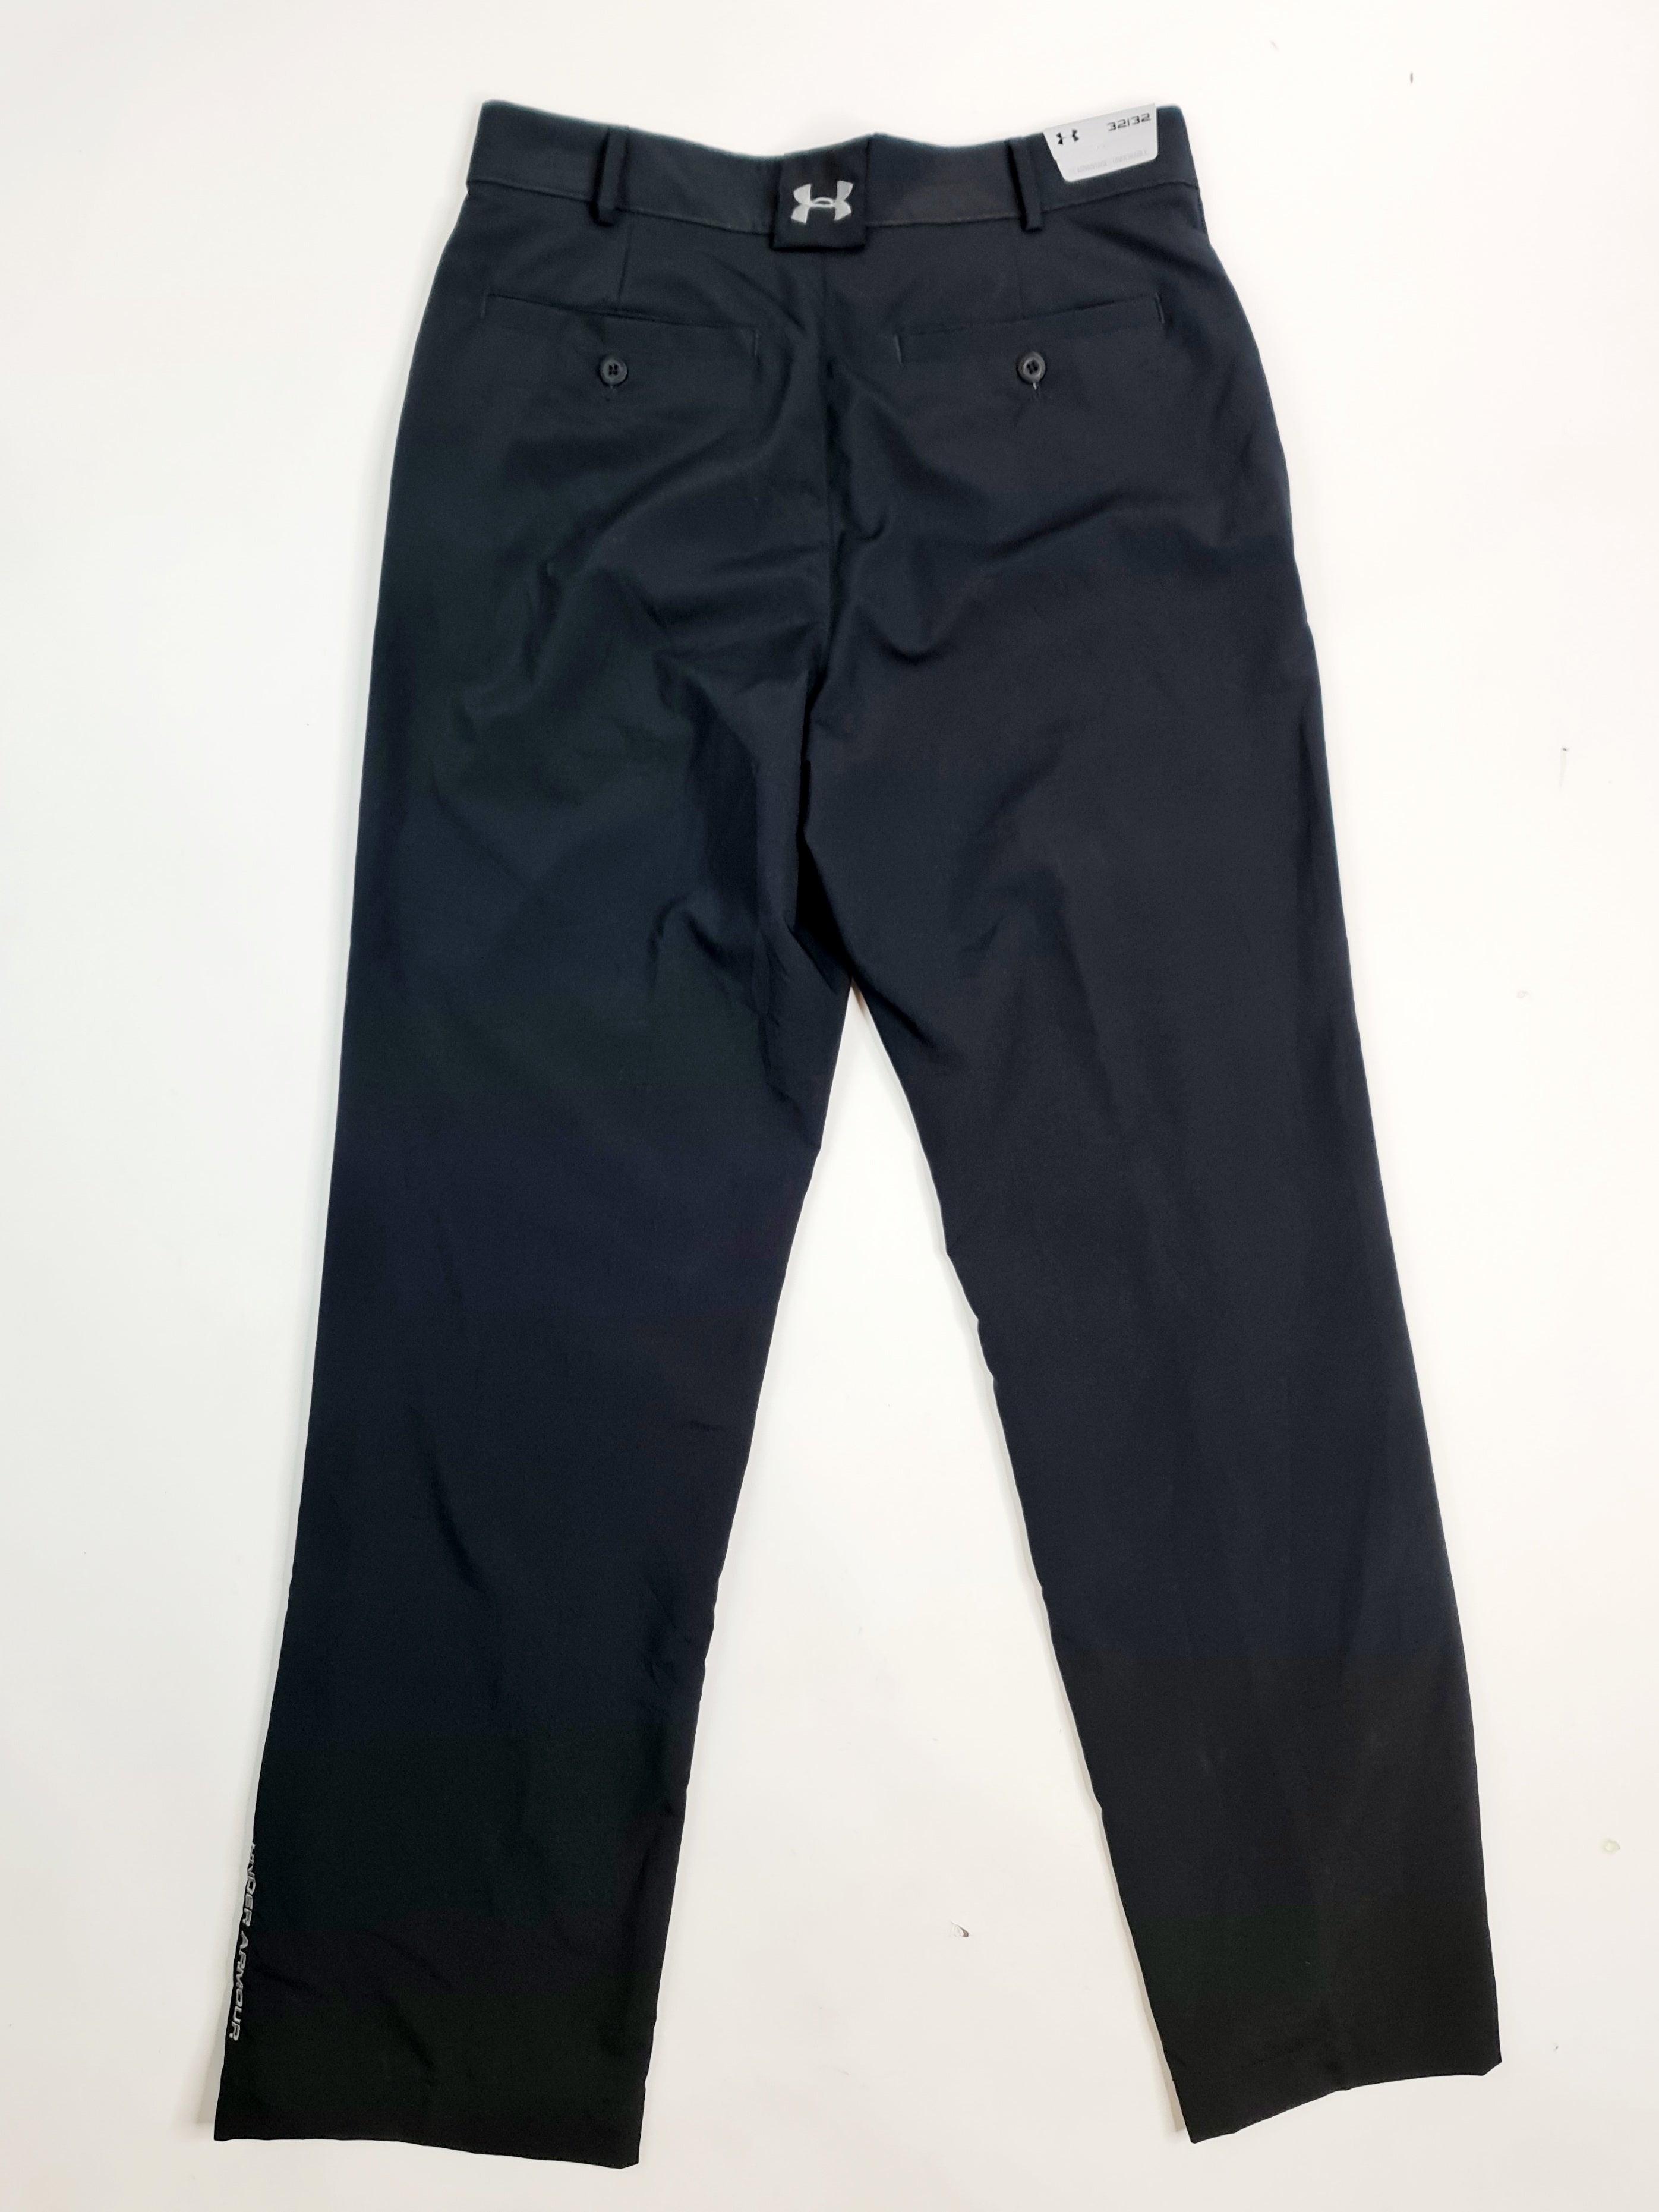 Pantalones de Vestir marca Under Armour - (Talla: 32 x32) Negro